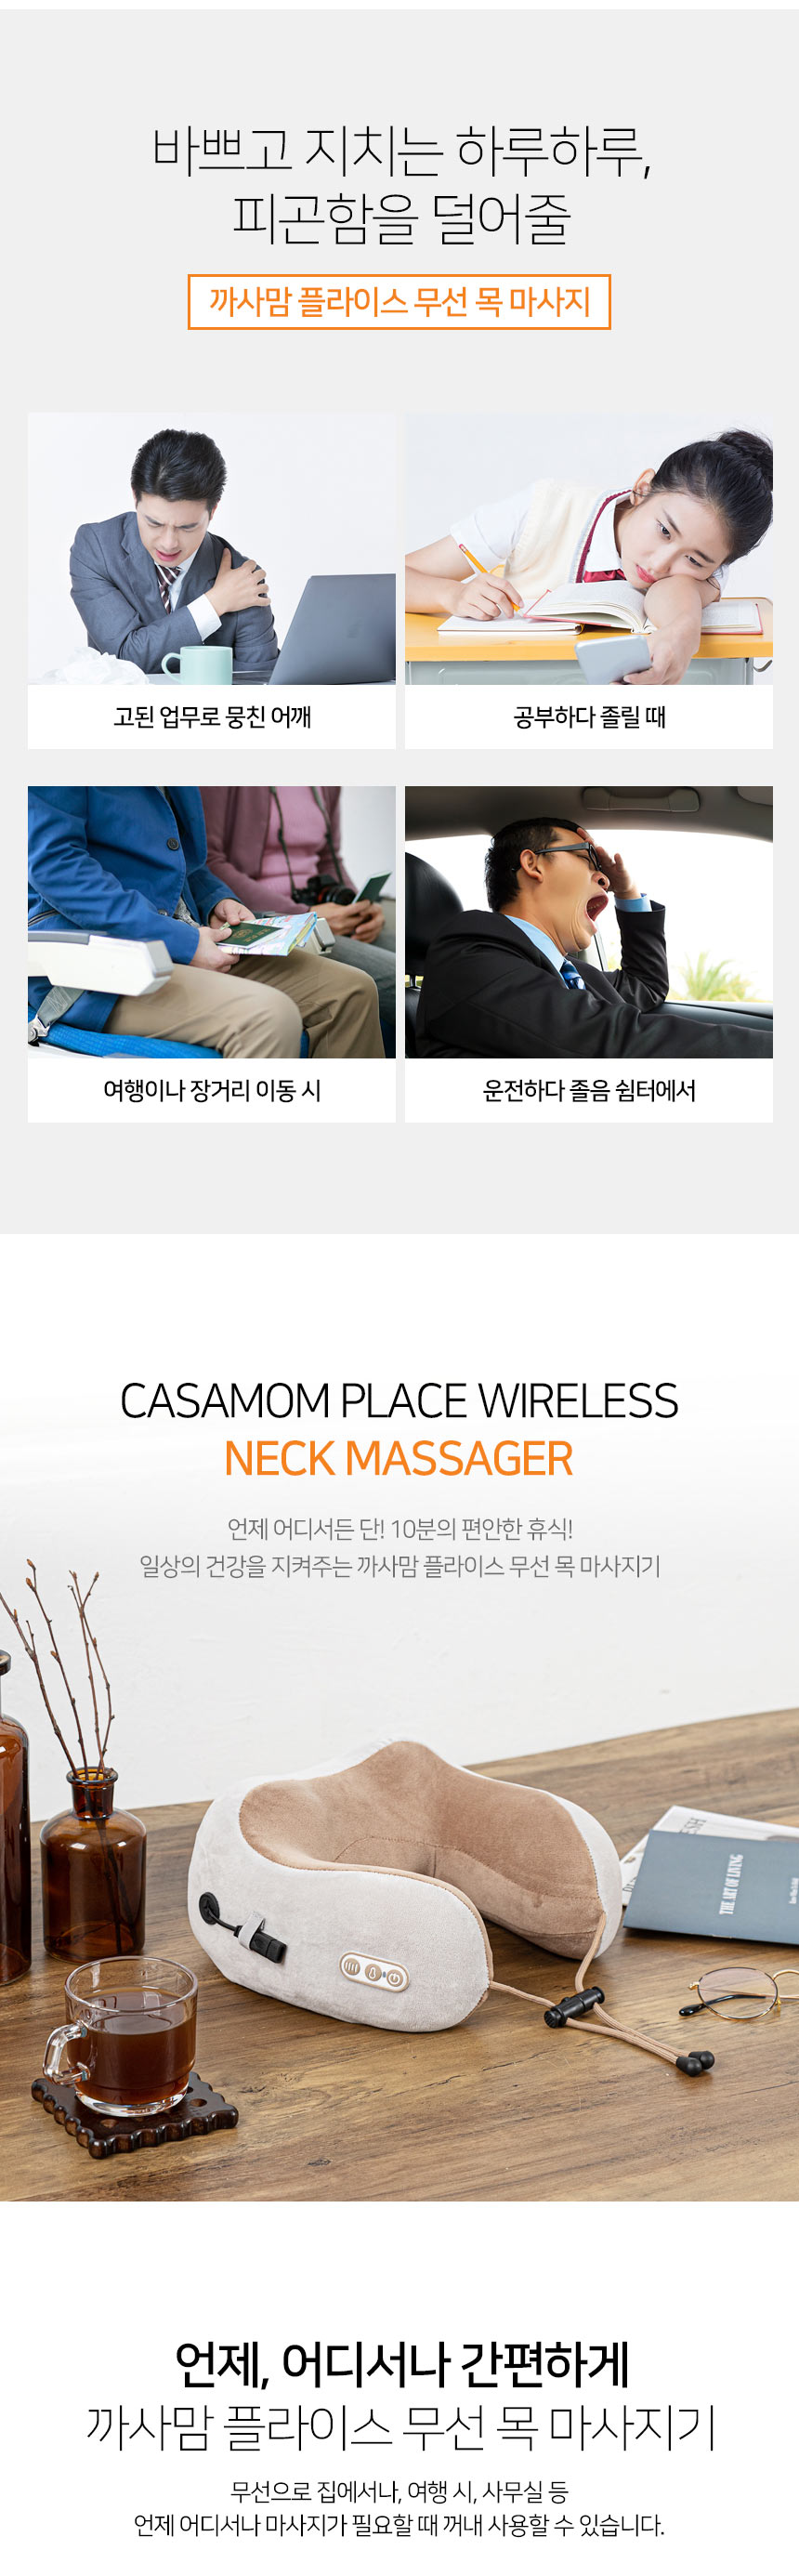 Casamom-Wireless-Neck-Massager_prev_02_172238.jpg